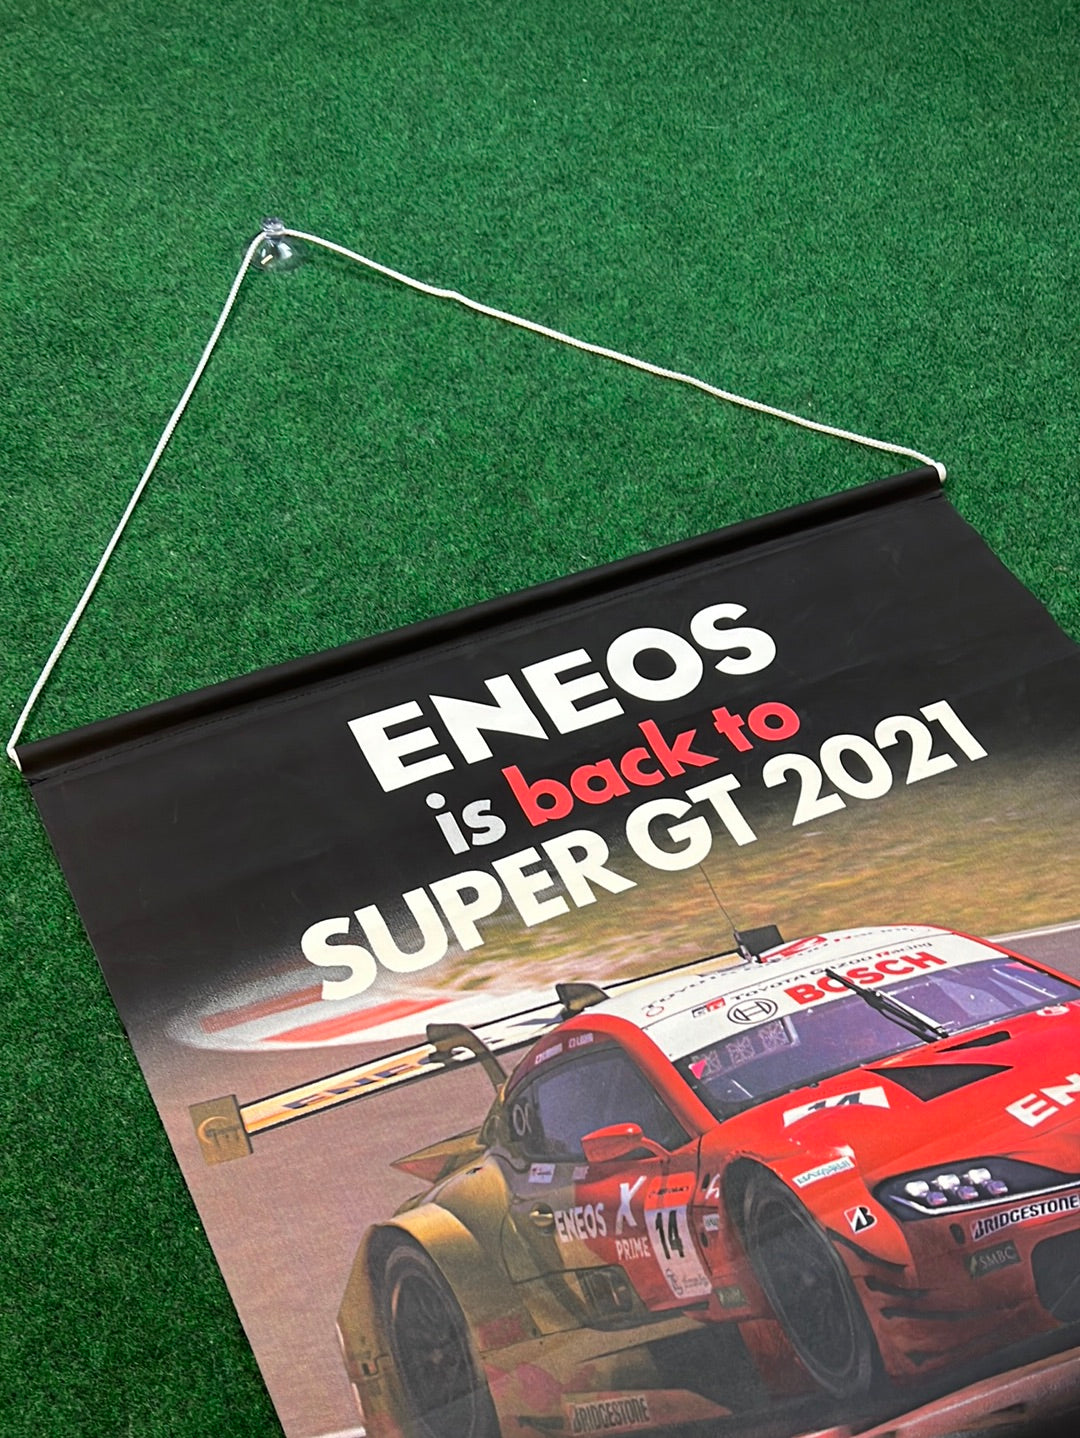 ENEOS Oil Super GT - A90 Toyota Supra Retail Banner